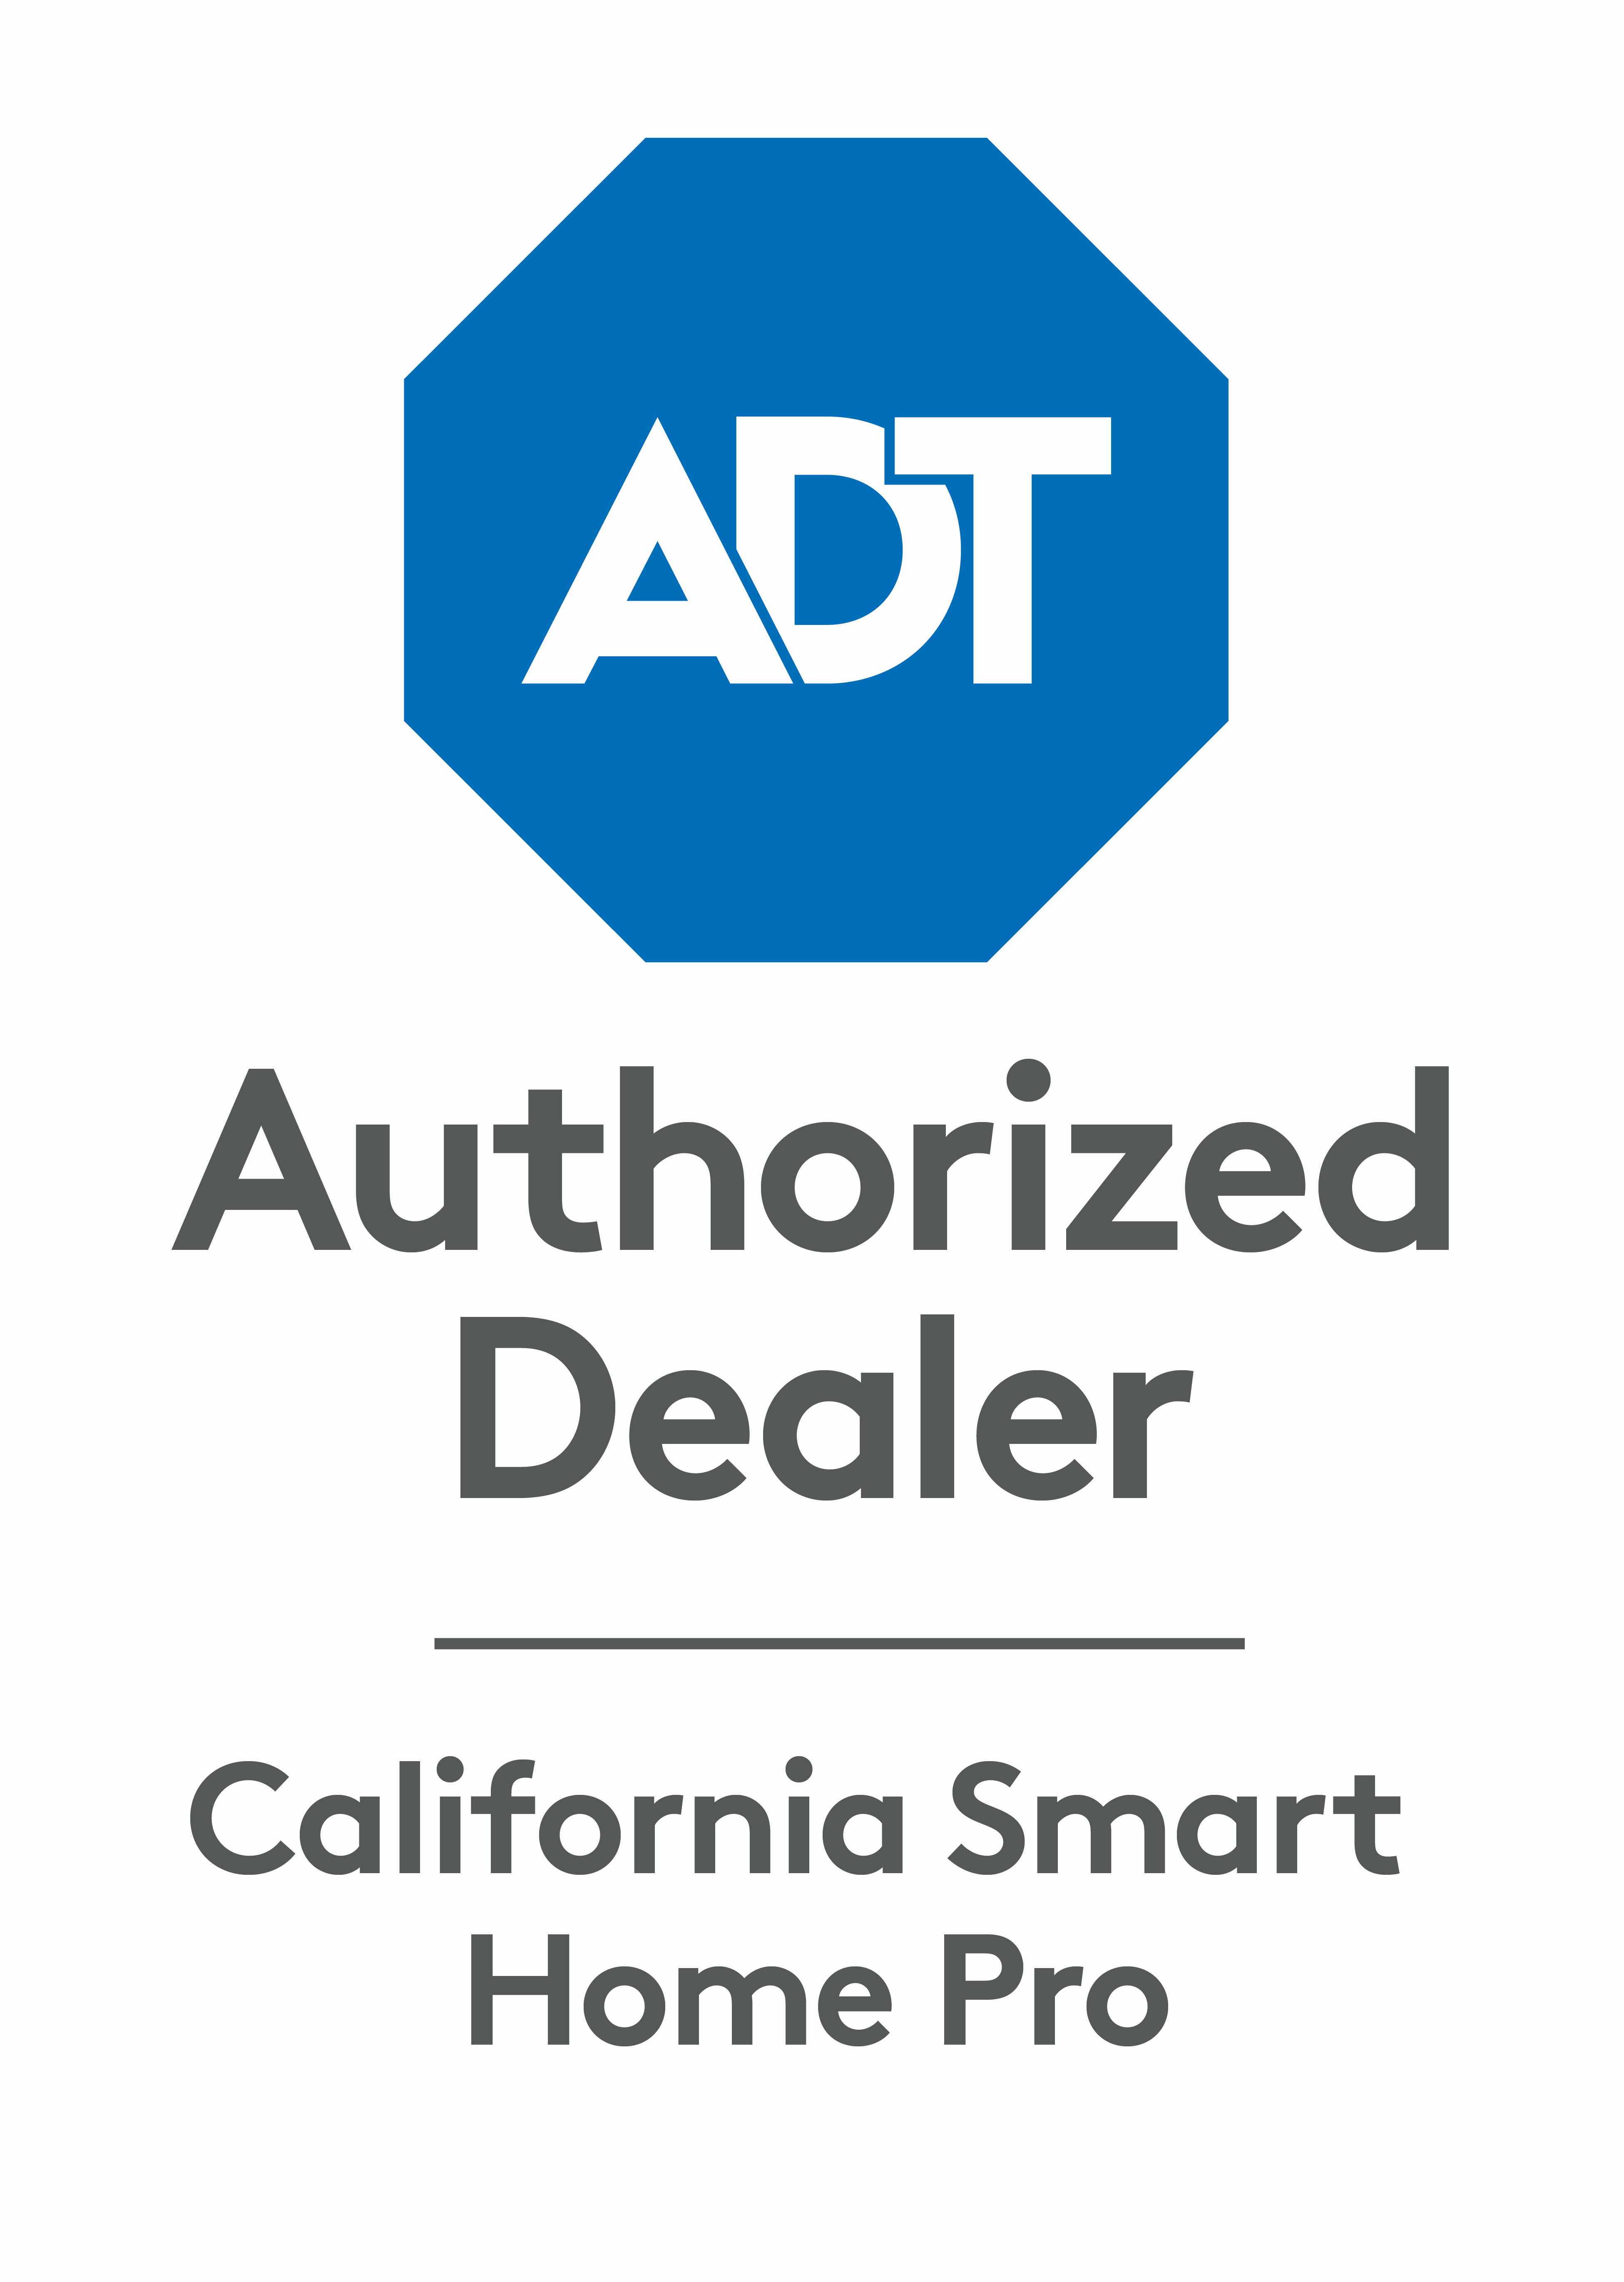 California Smart Home Pro Logo